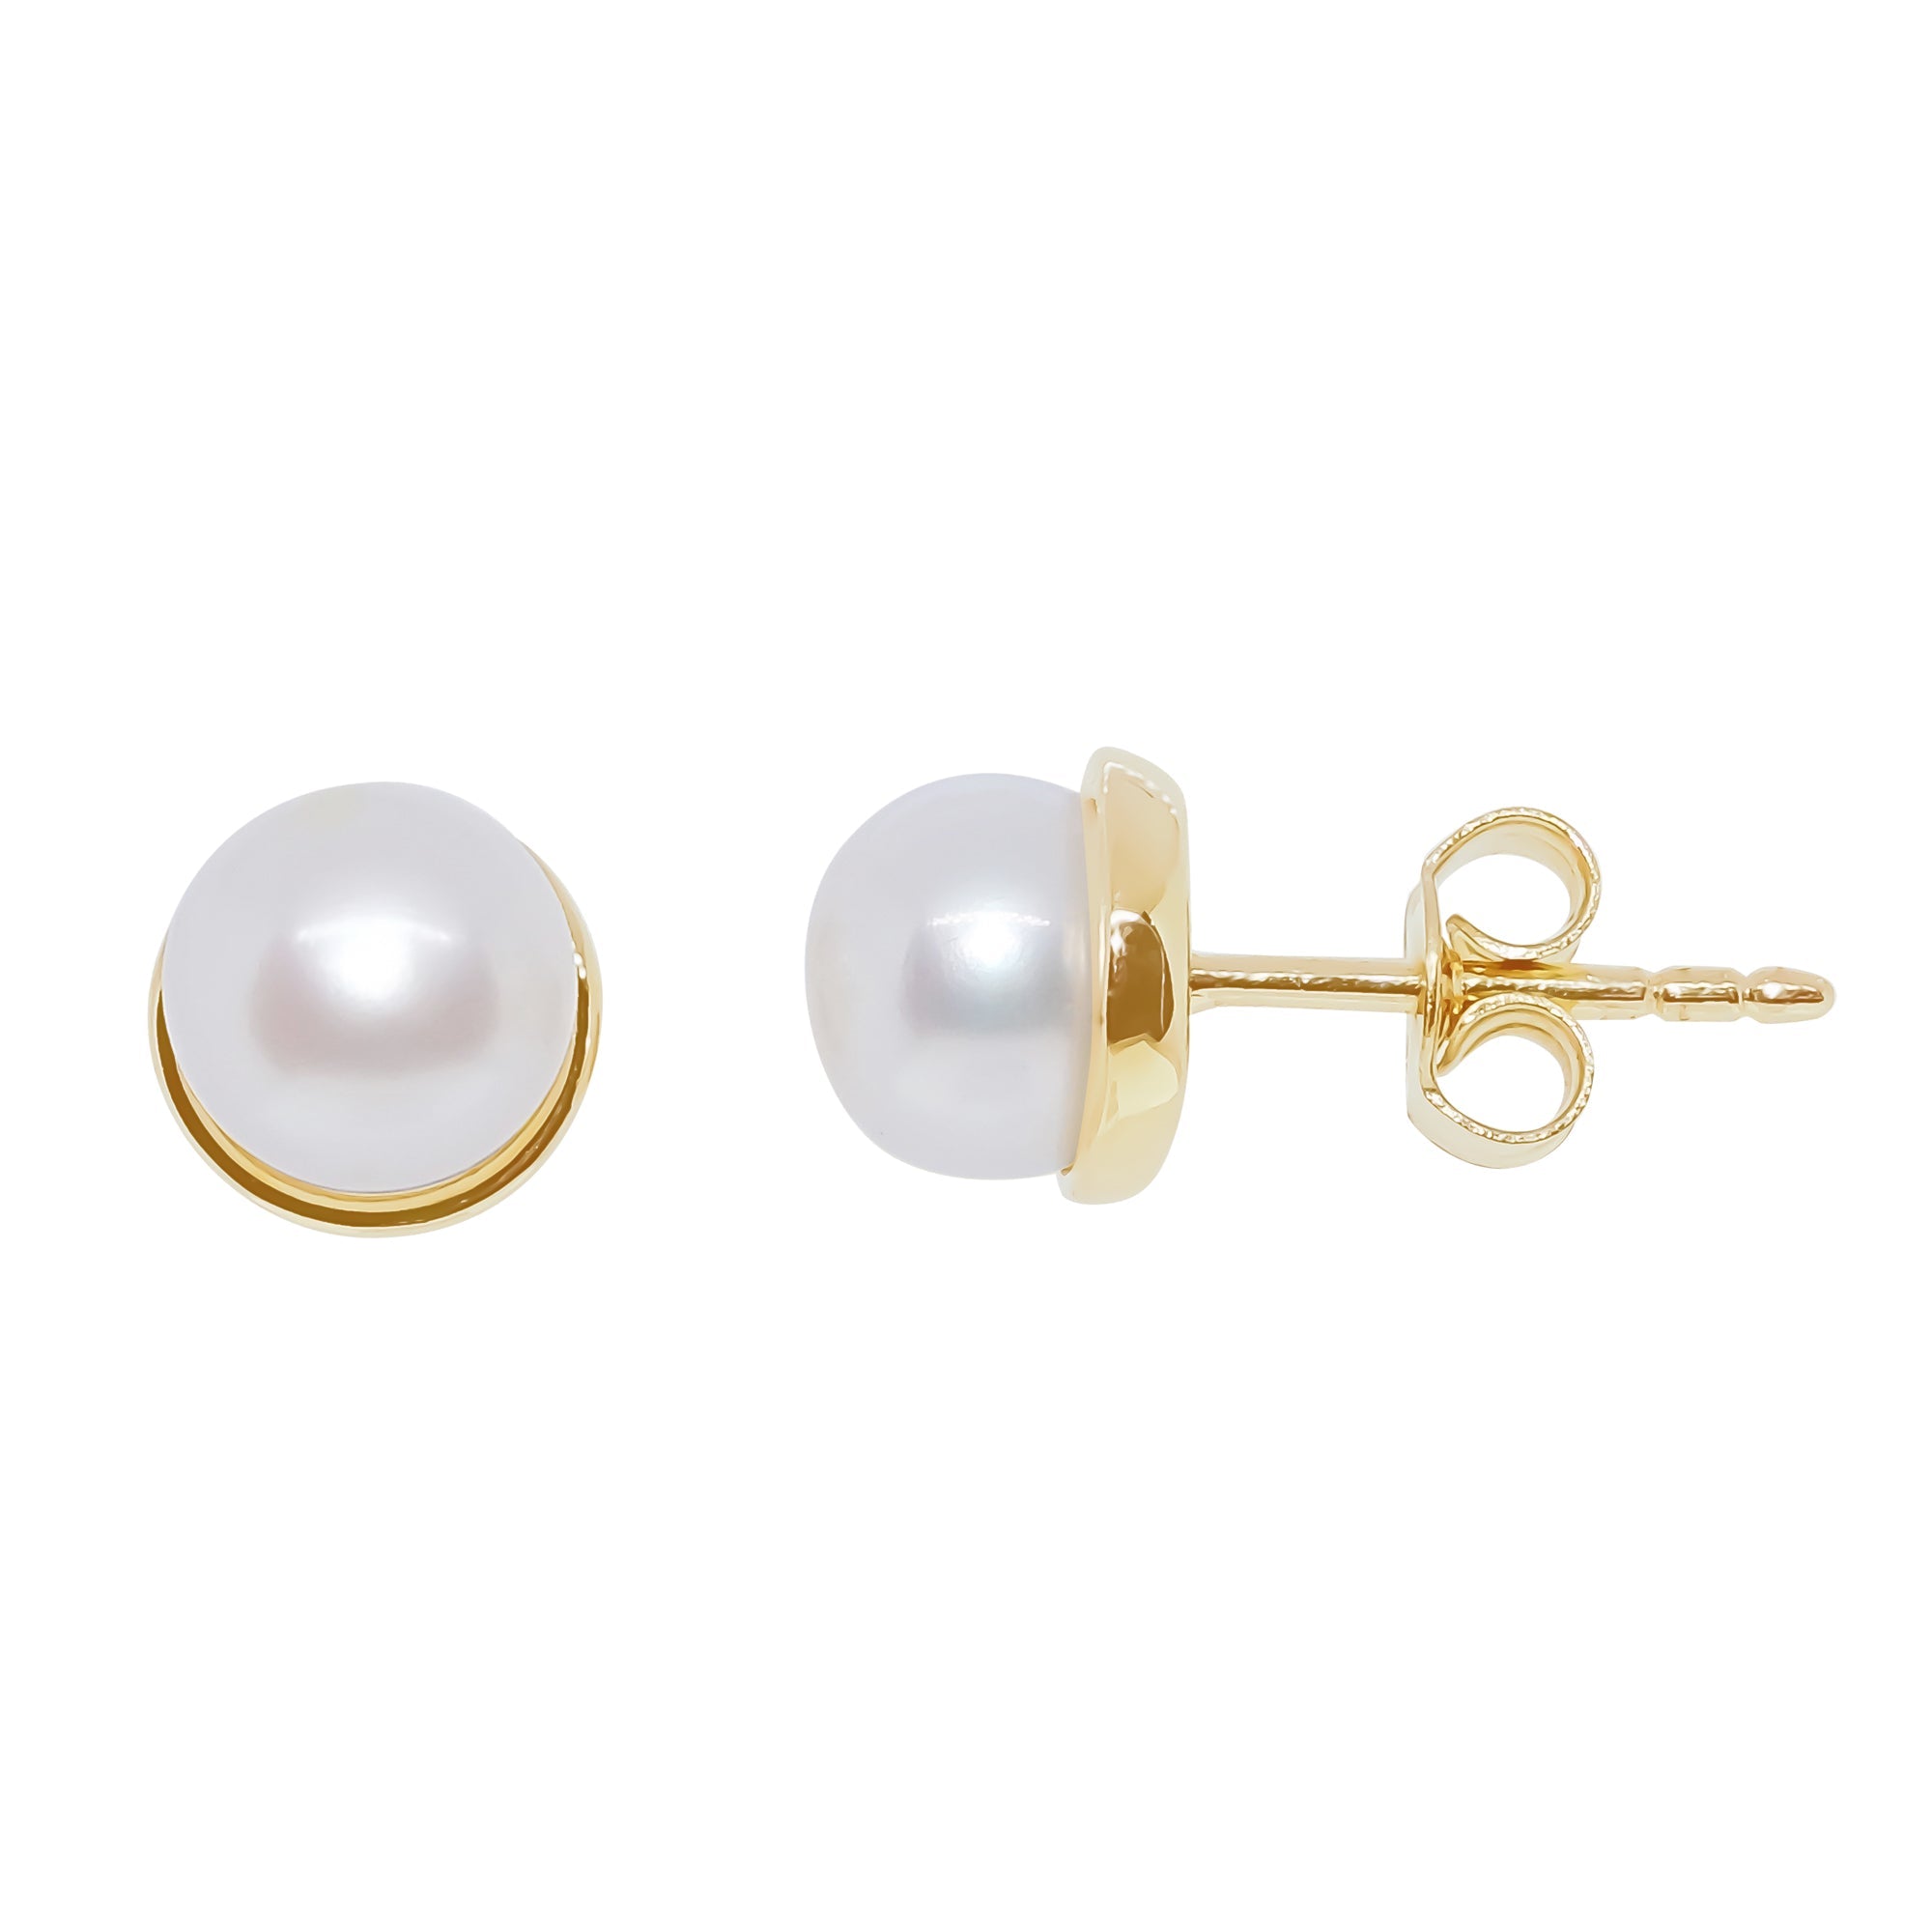 9ct gold 6mm freshwater pearl stud earrings